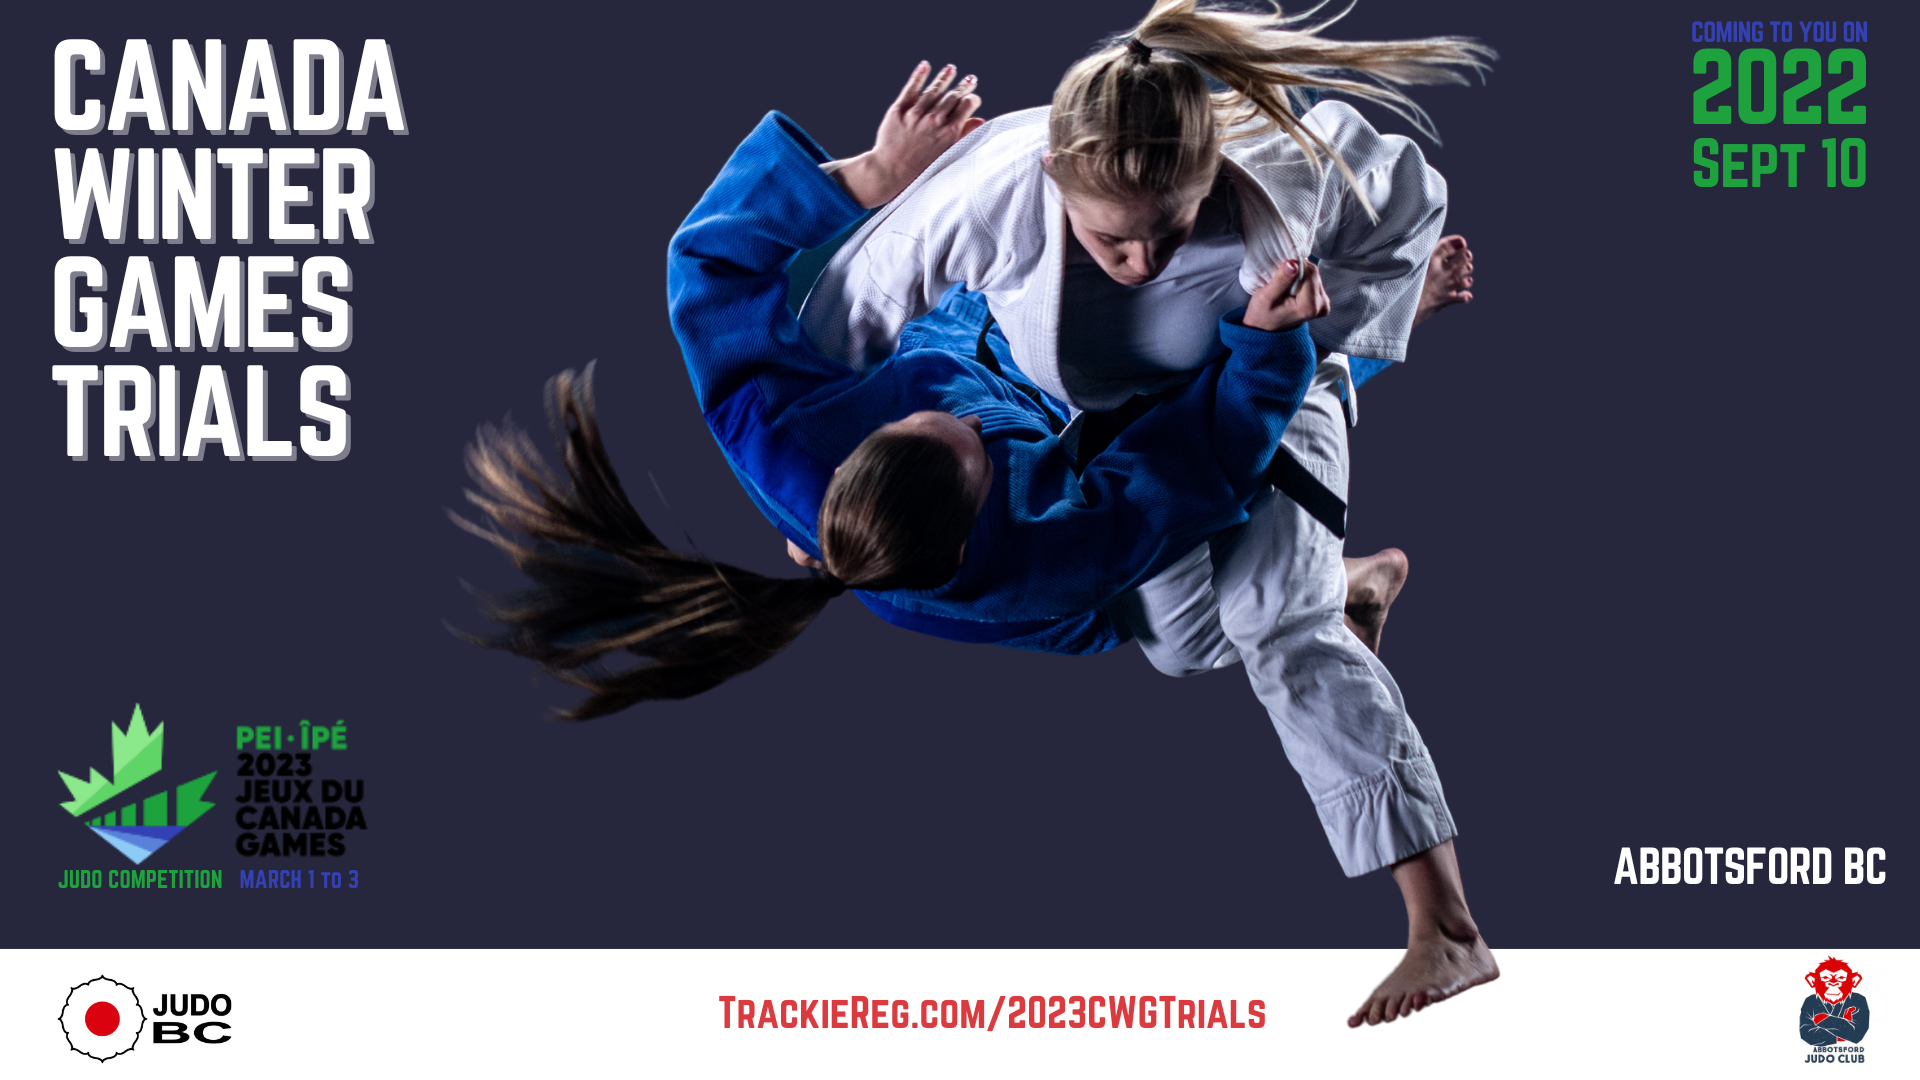 Judo BC Canada Winter Games Trials Online Registration TrackieReg